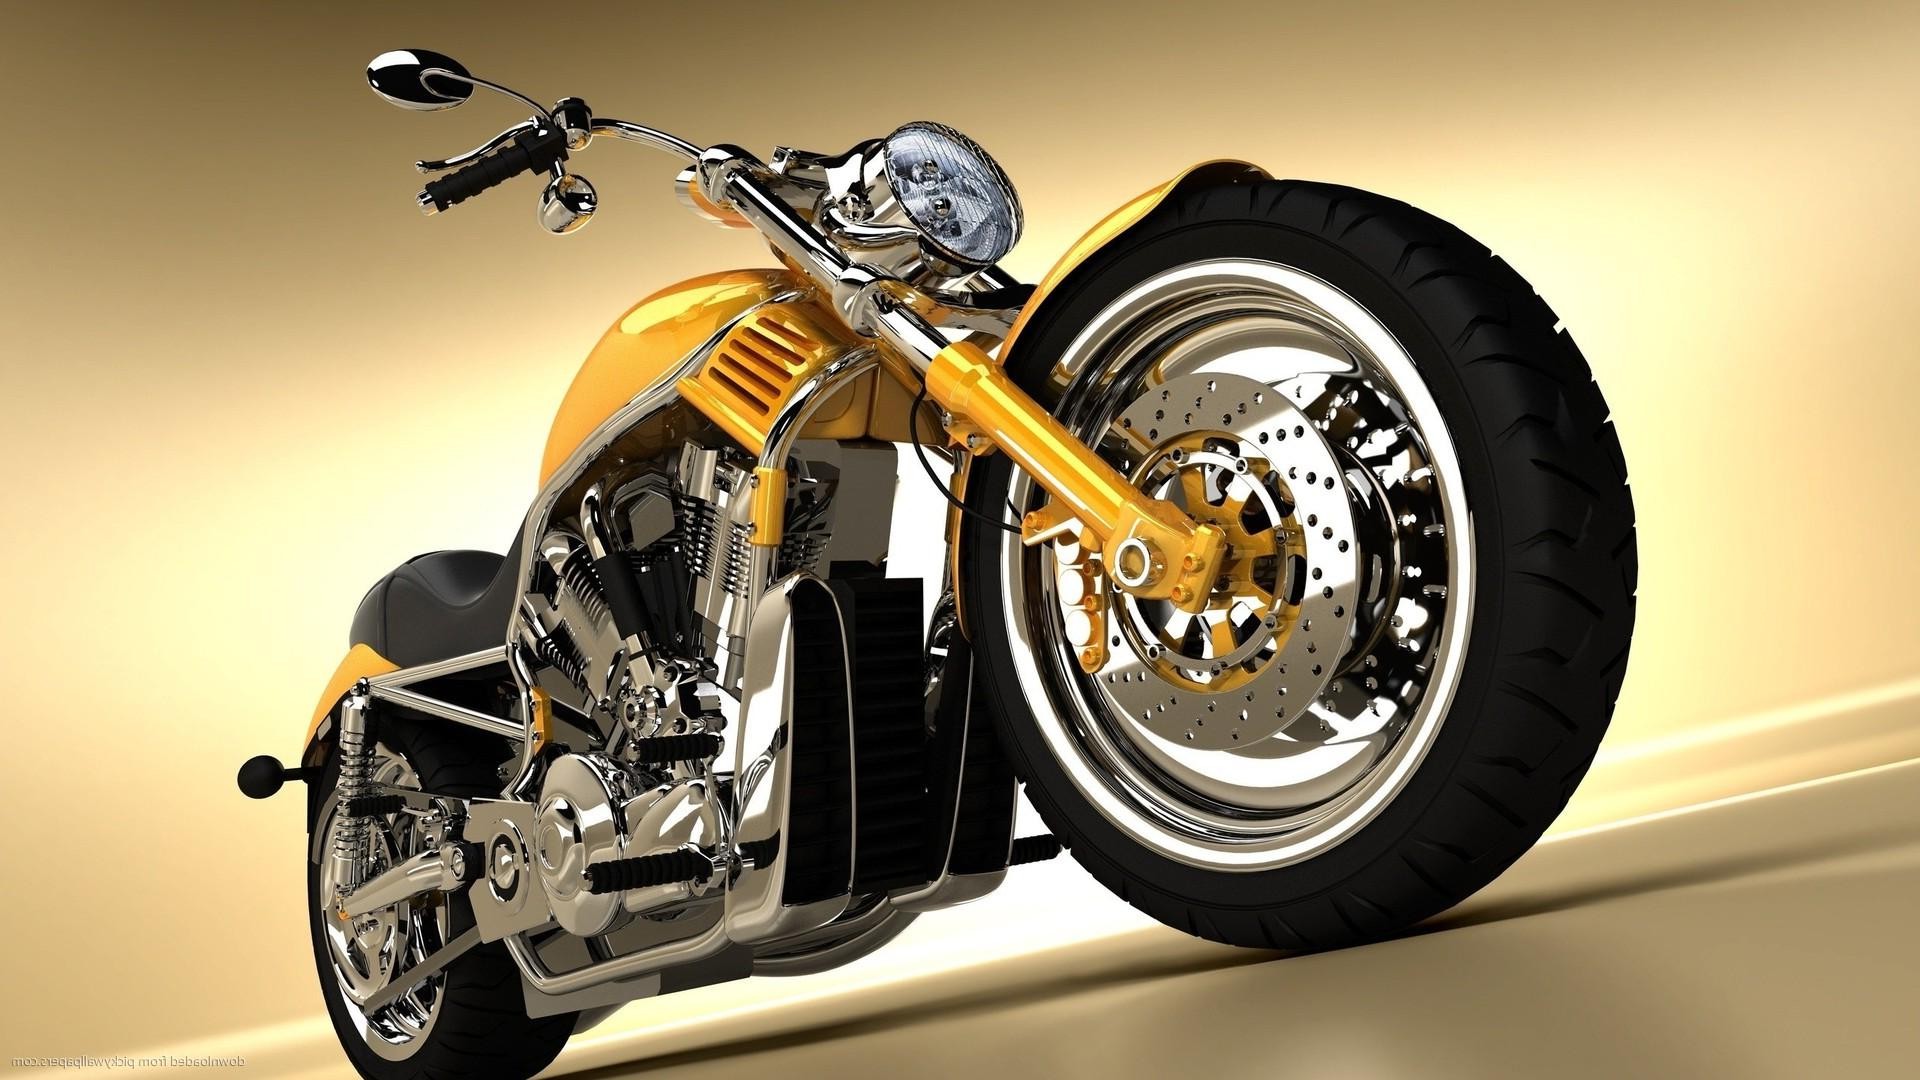 Harley Davidson Motocyle Full Hd Wallpaper - Harley Davidson Bike Wallpaper Download - HD Wallpaper 